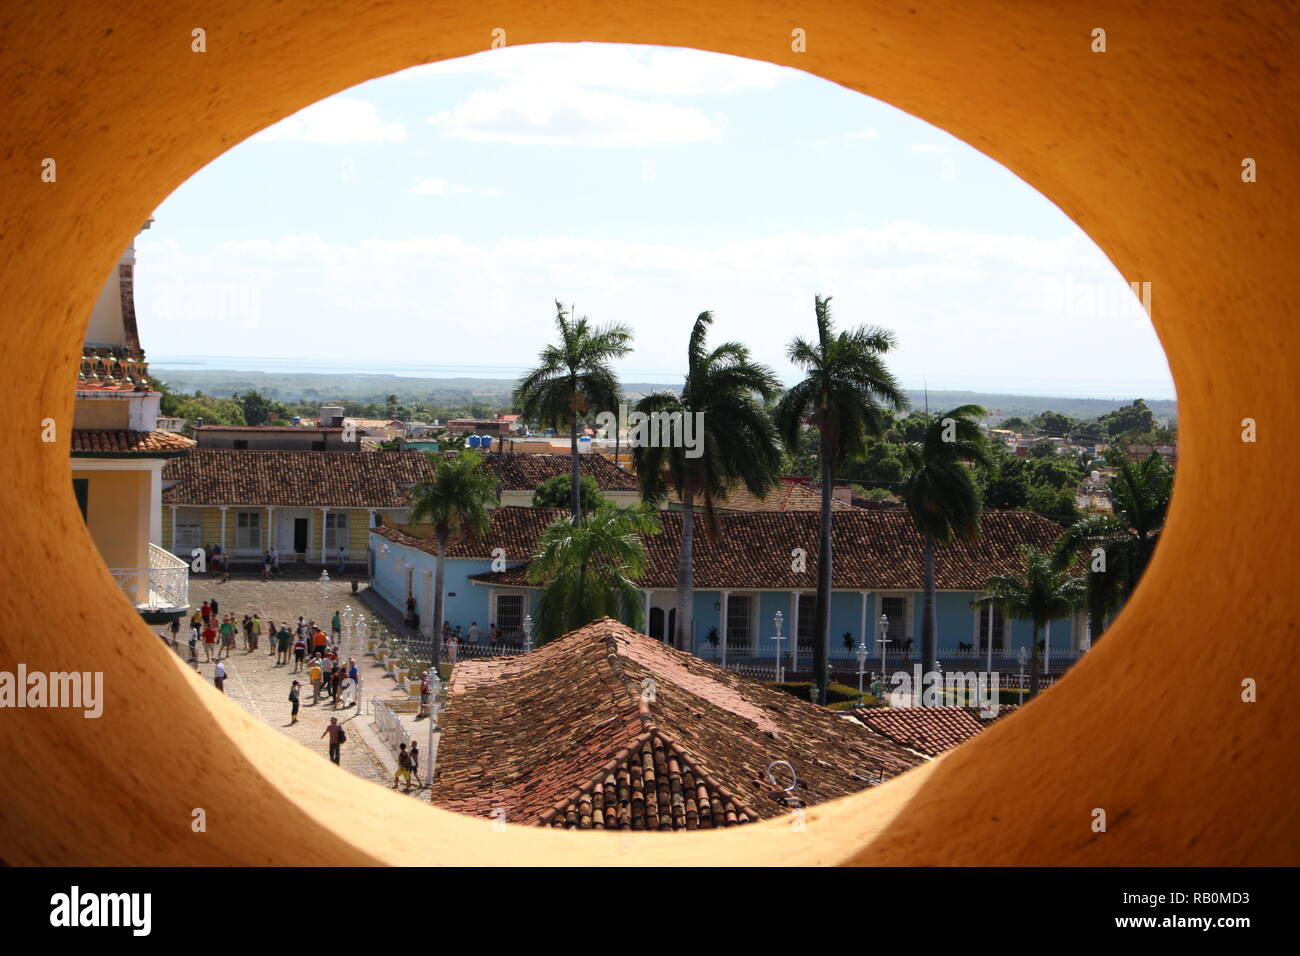 Town of Trinidad through an oval window Stock Photo